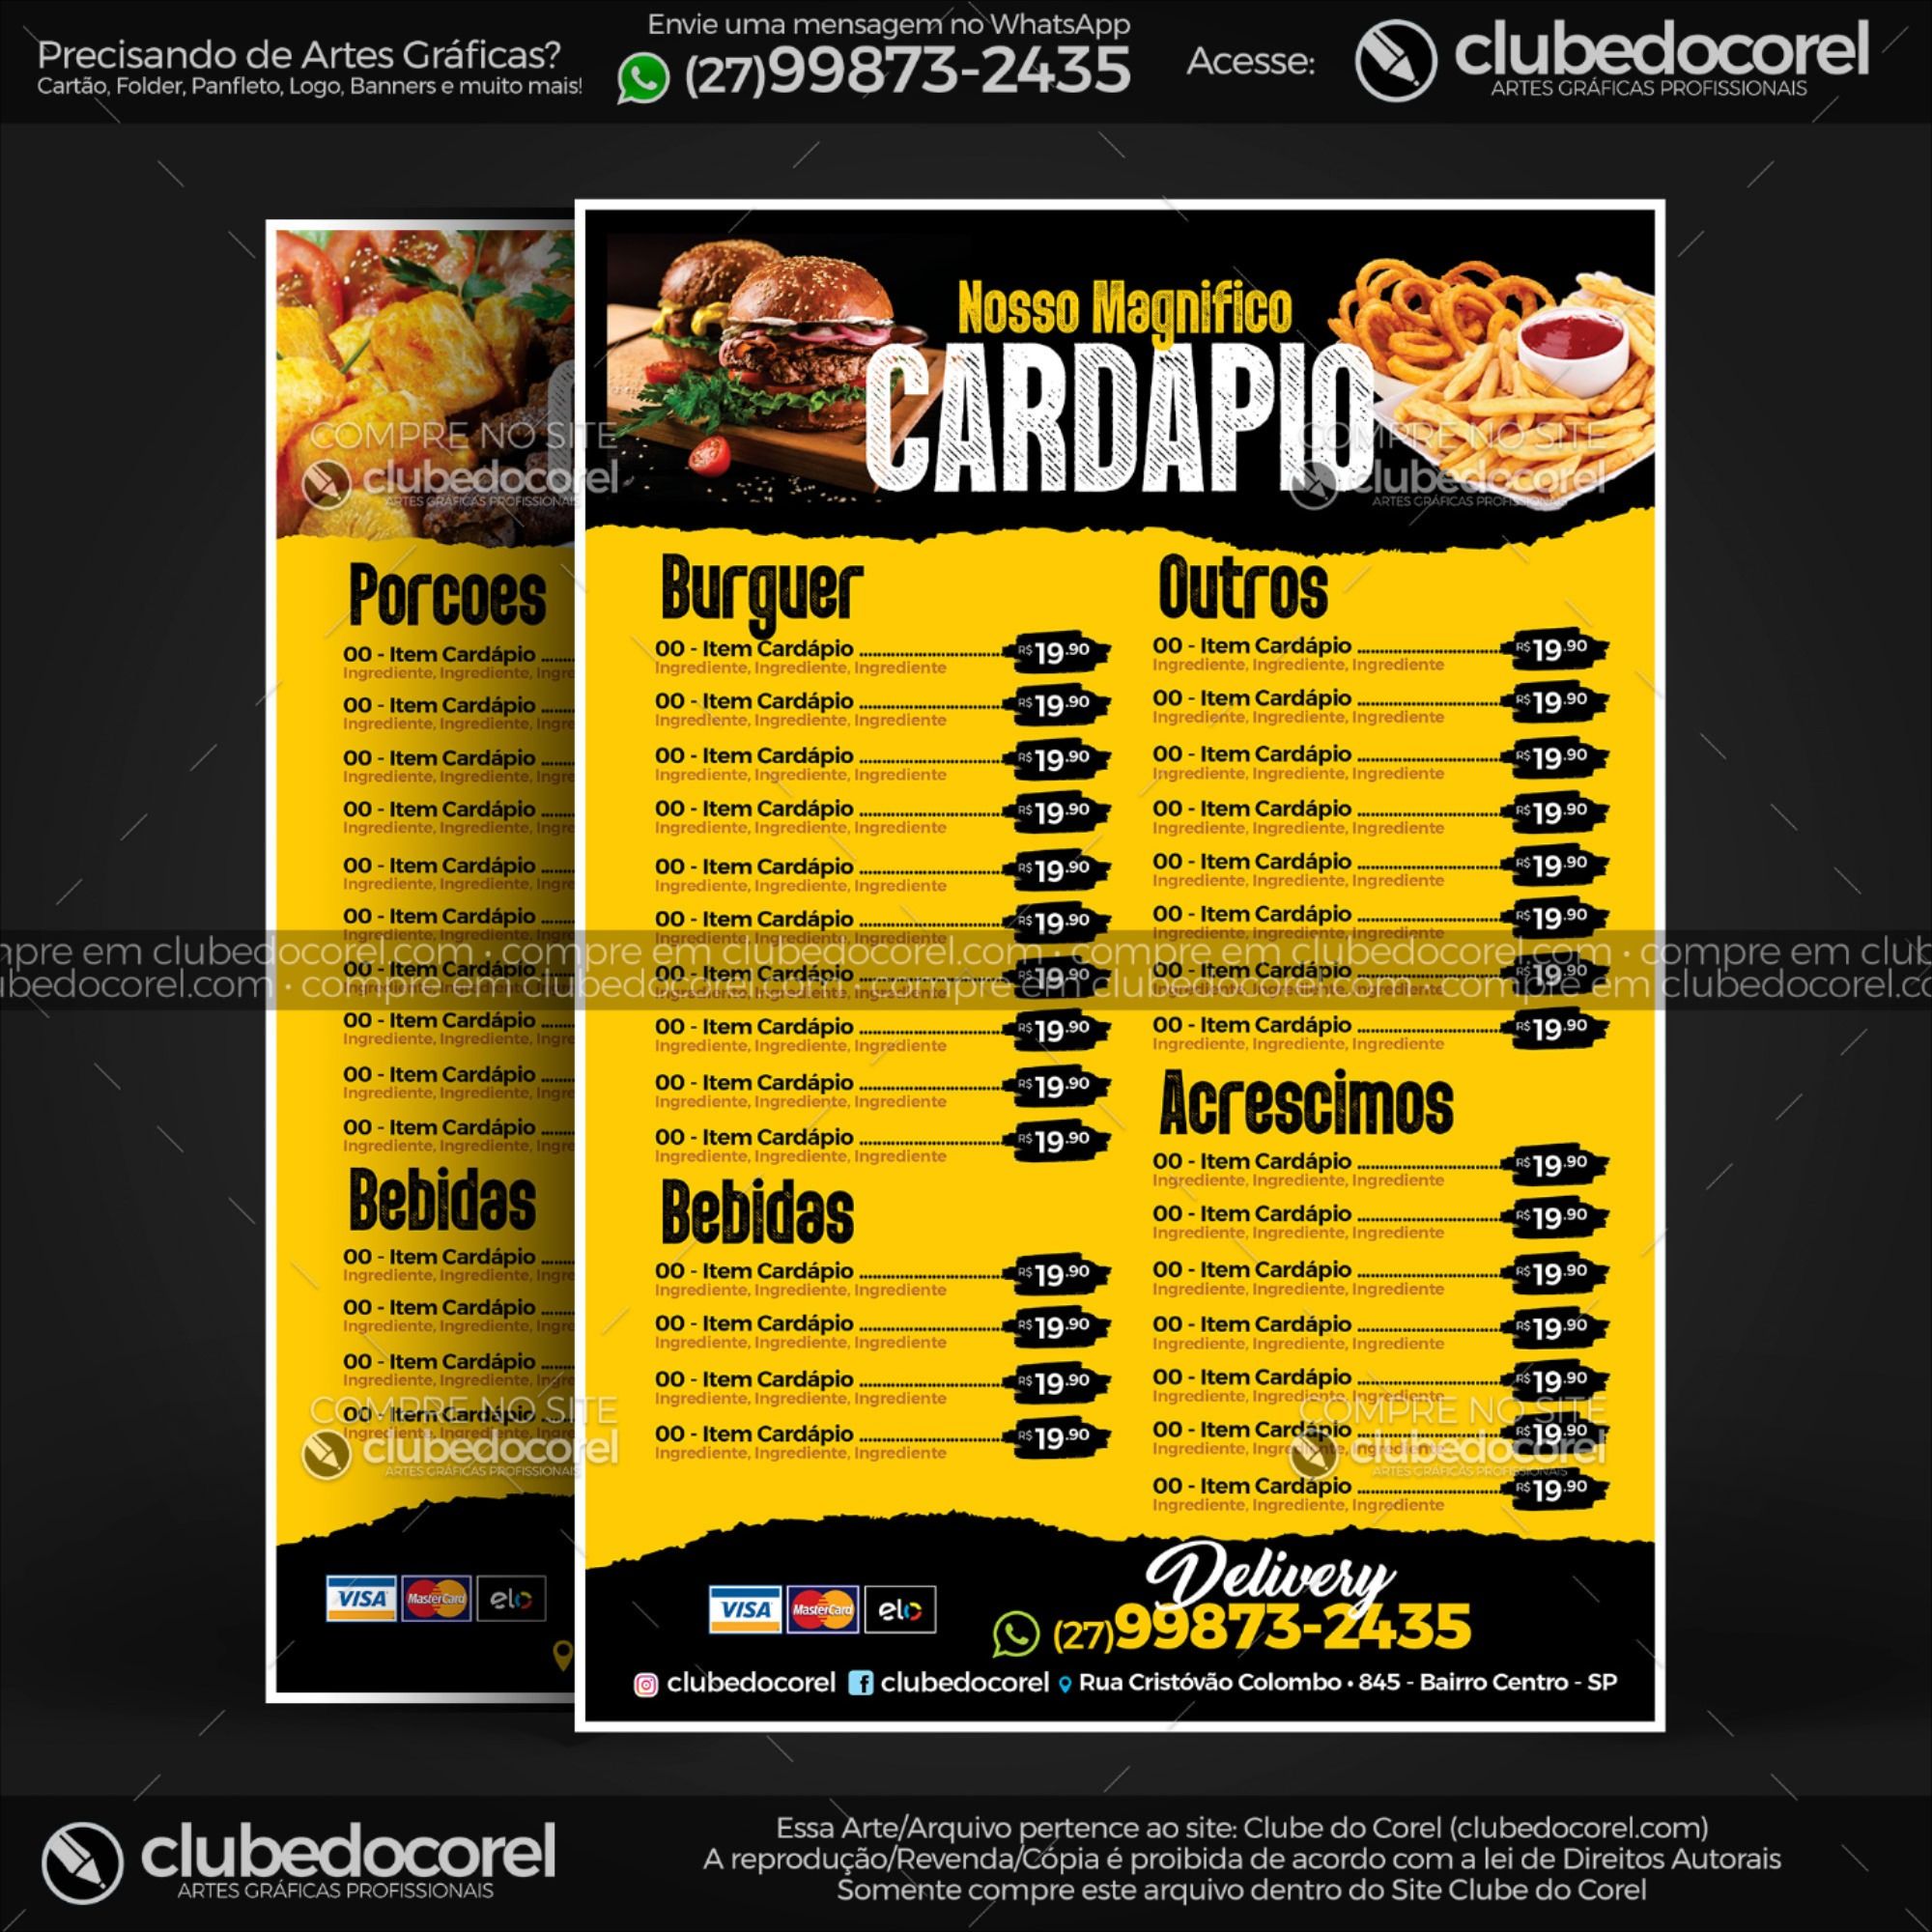 Cardápio Lanchonete #04 - Hamburguer Gourmet (CDR e PDF) | Clube do Corel |  Cardápio lanchonete, Cardapio de lanches, Hambúrguer gourmet - cardapio